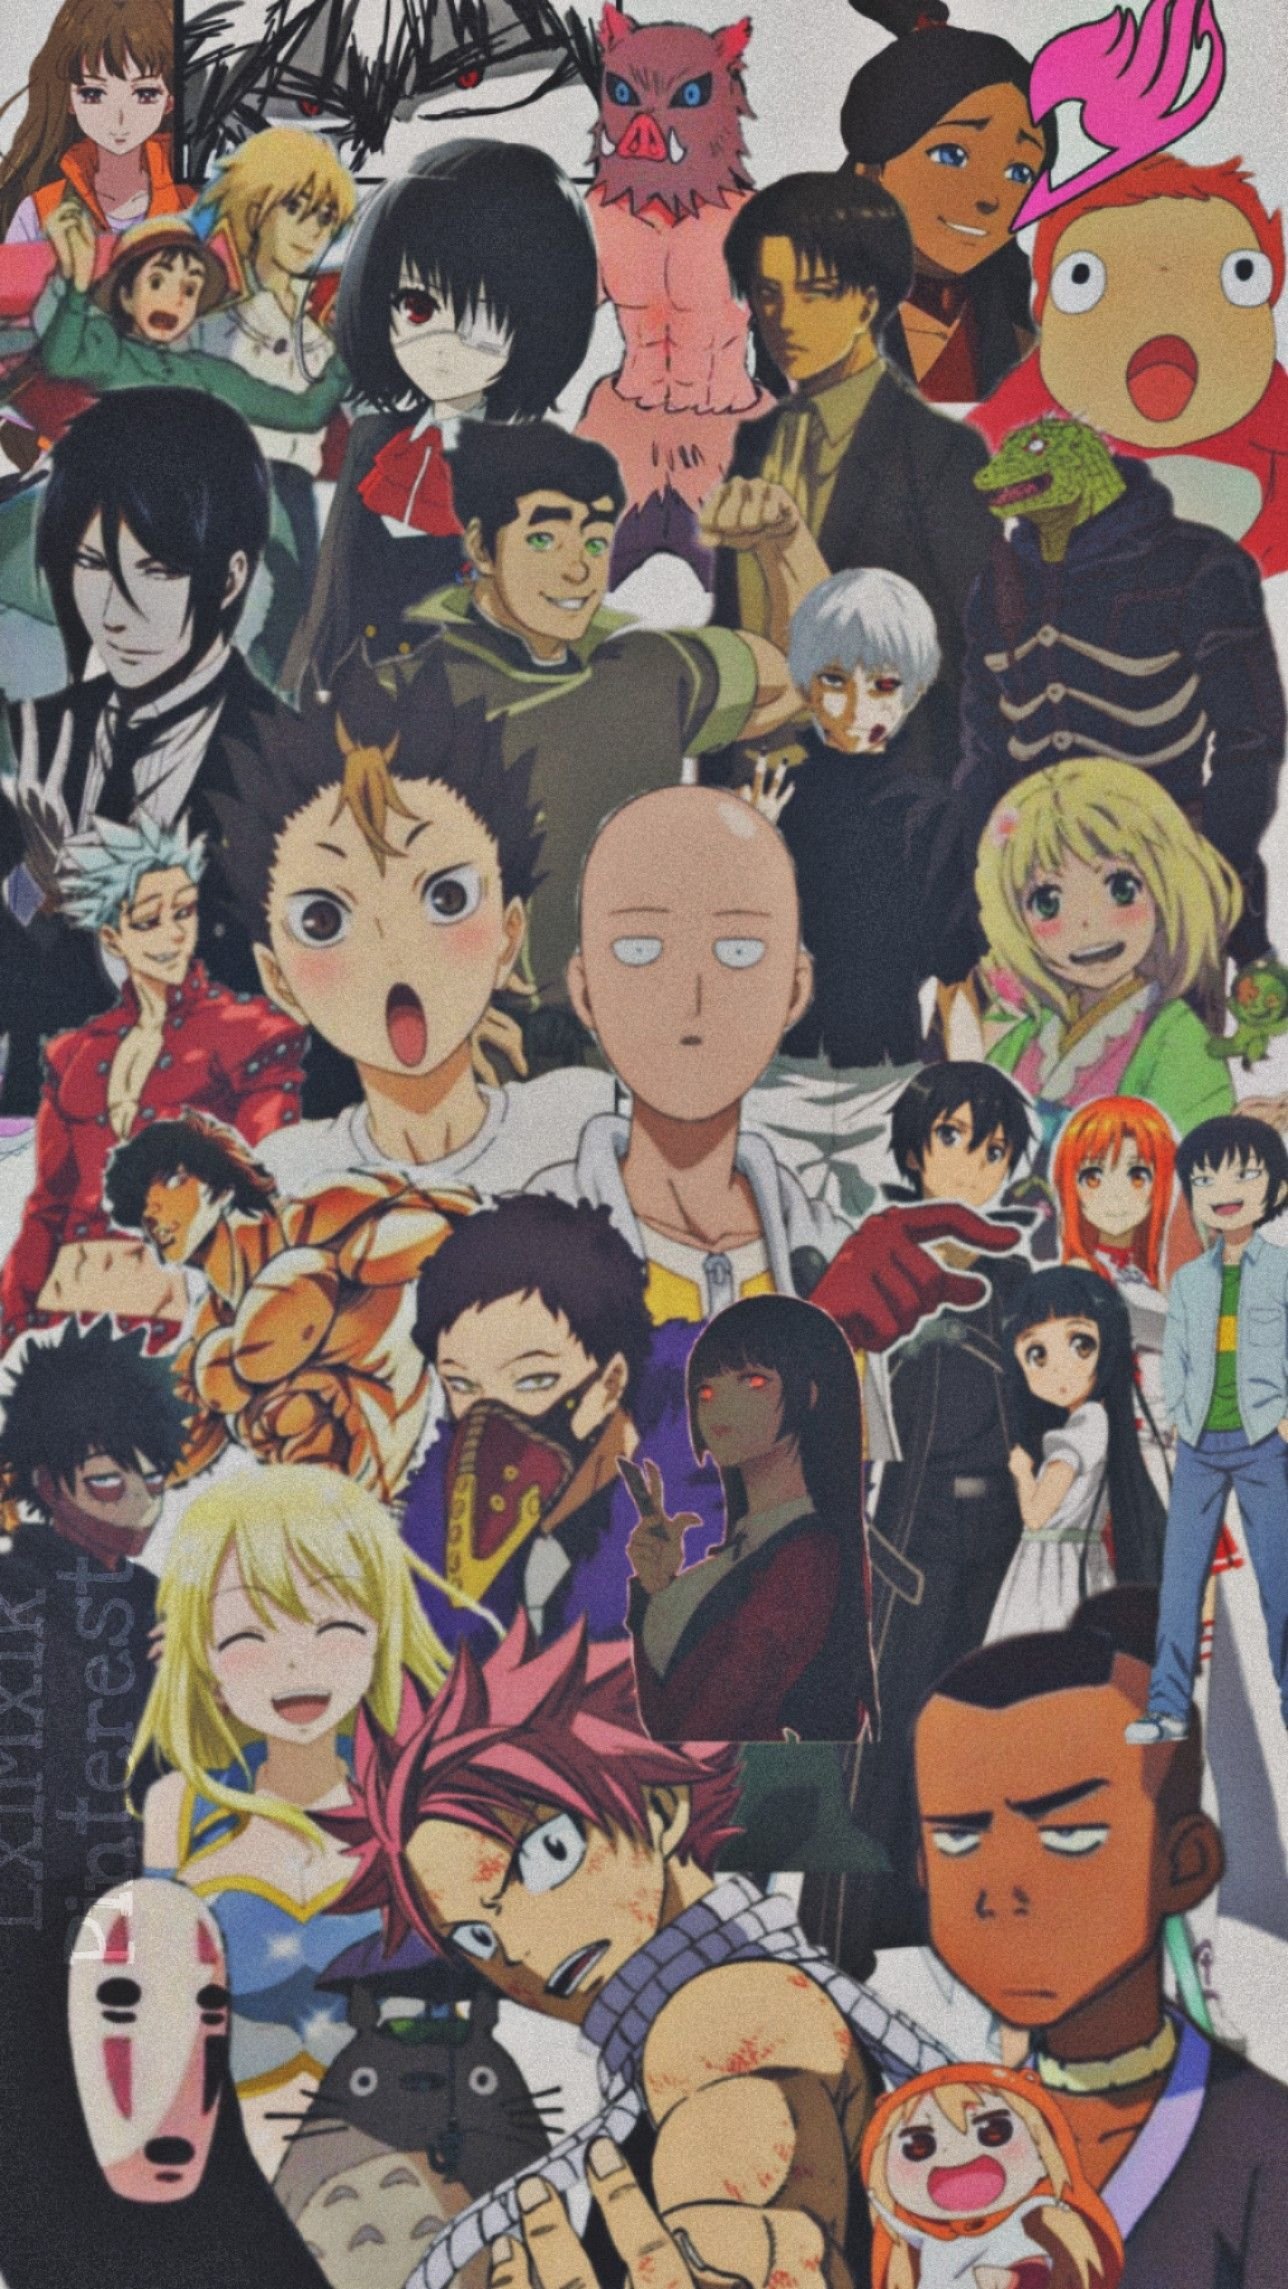 24+] Naruto All Characters iPhone Wallpapers - WallpaperSafari